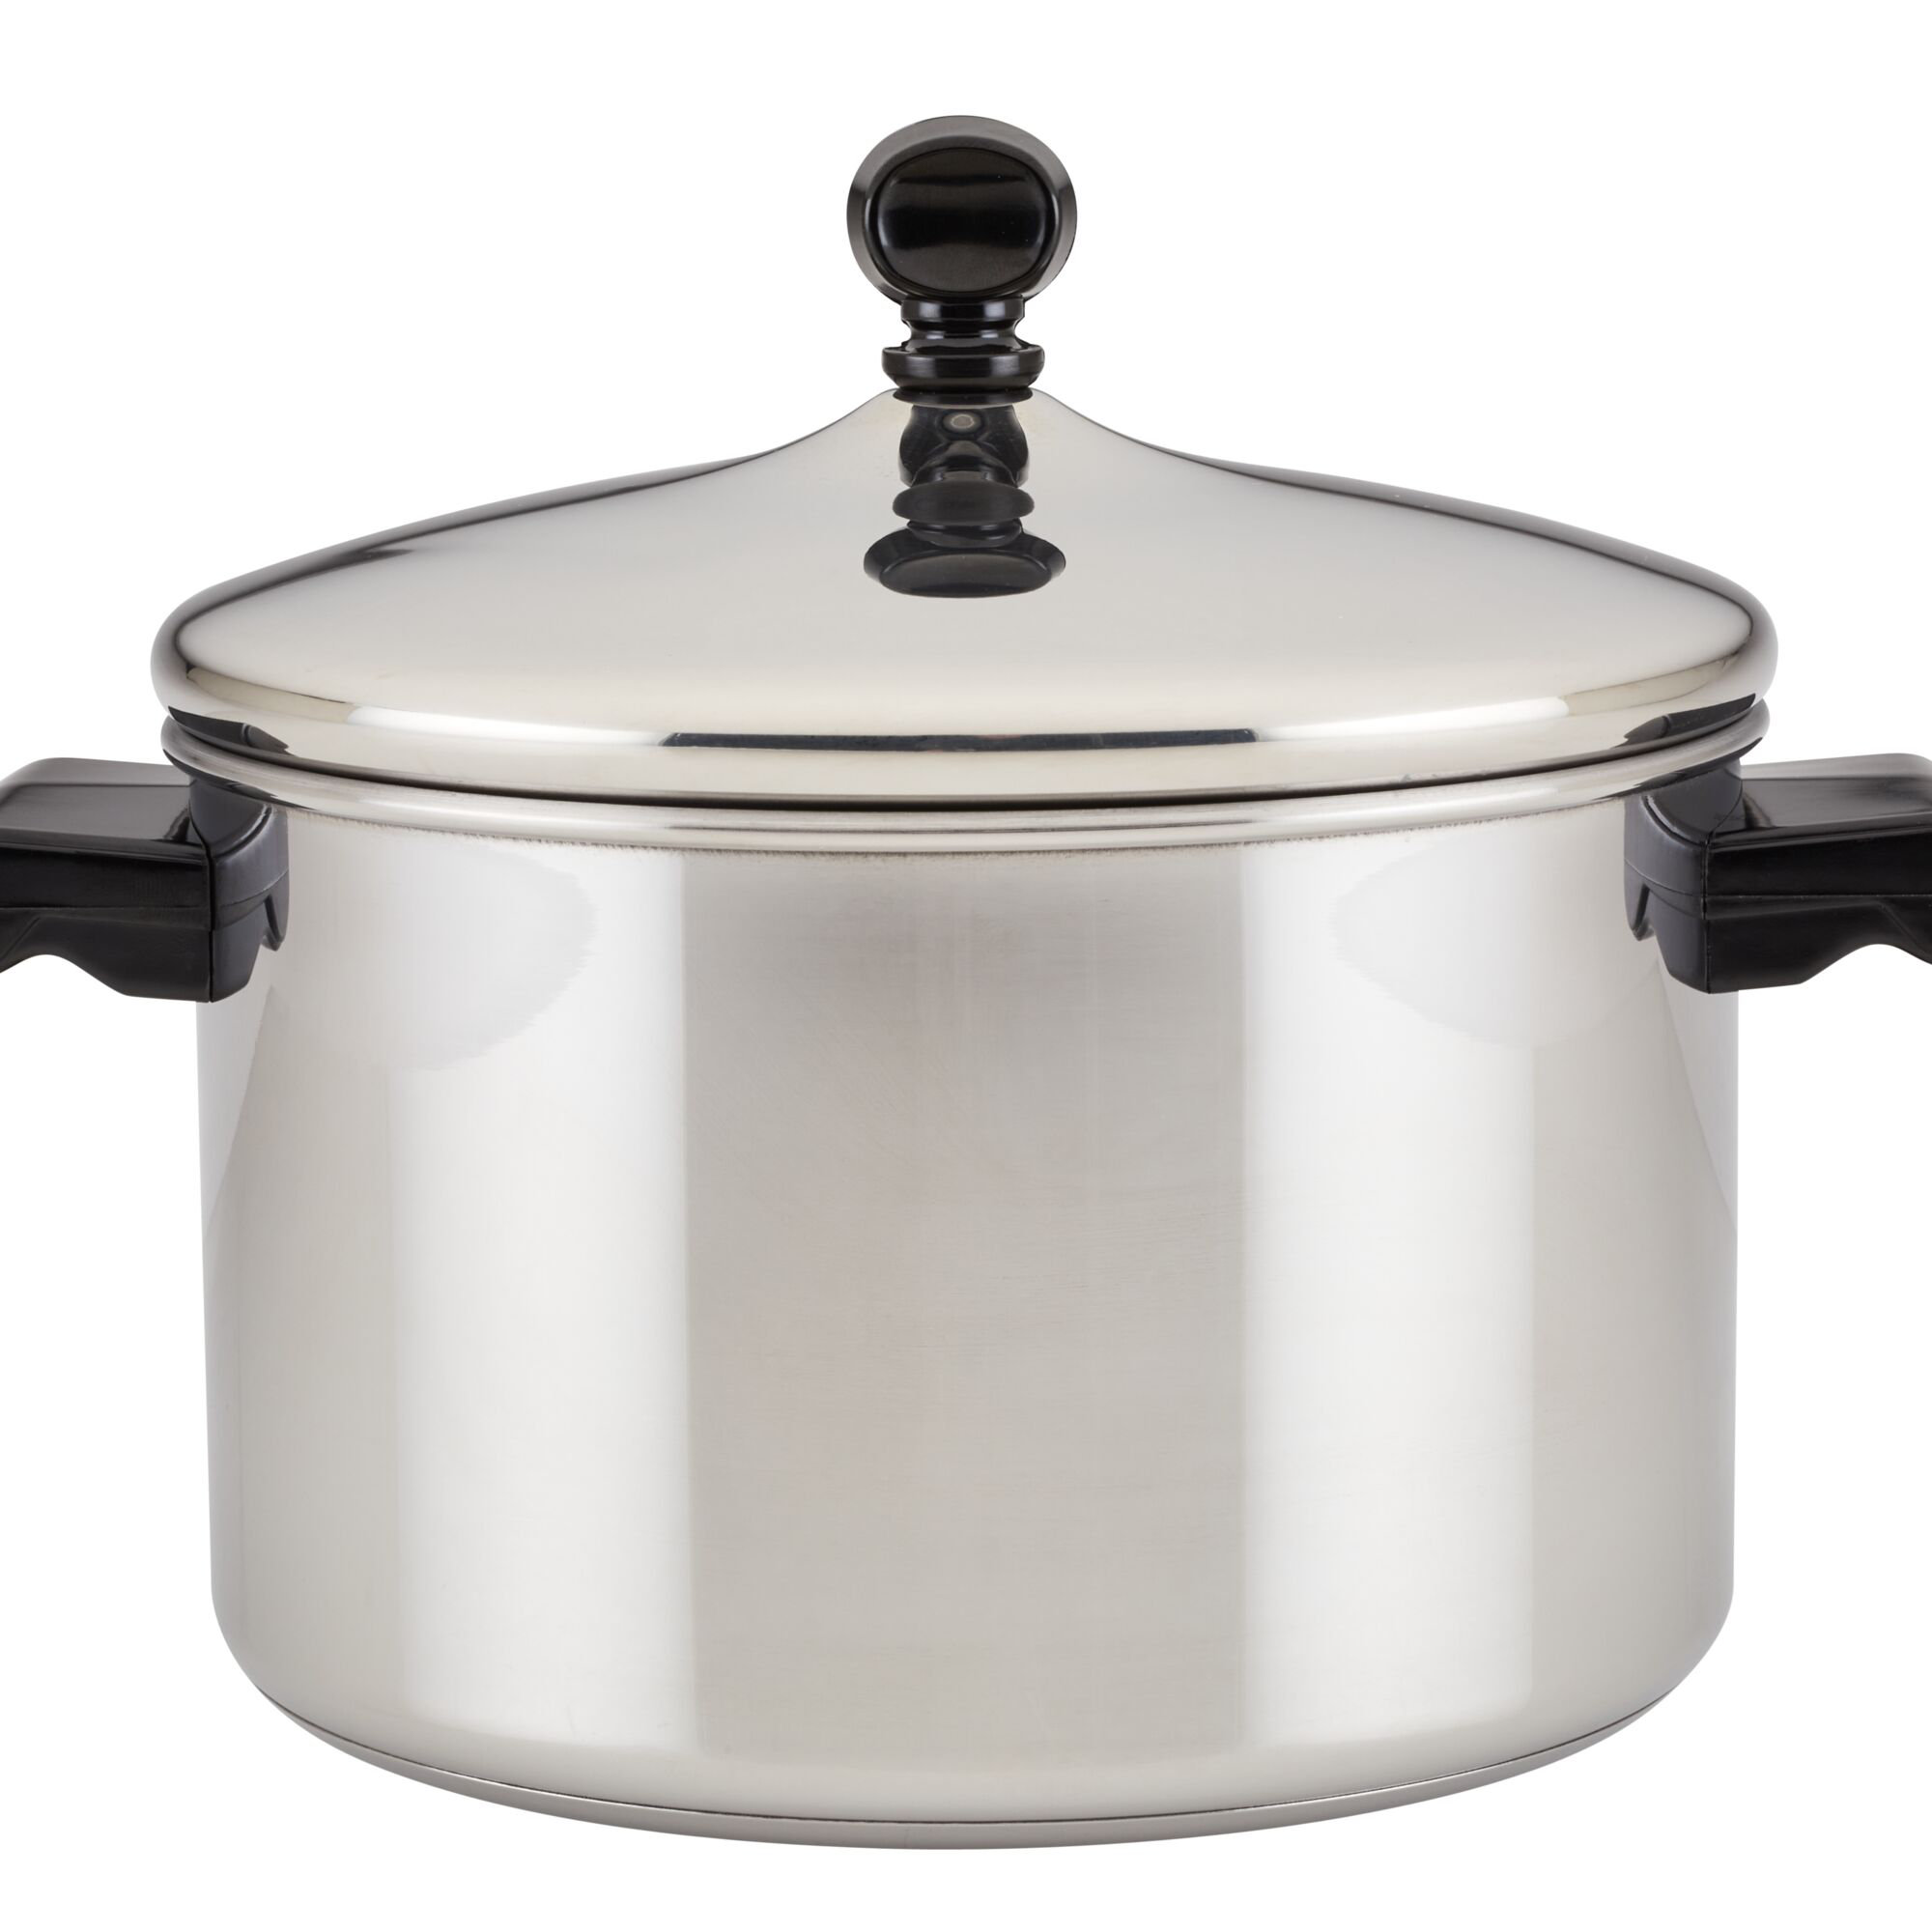 Farberware Millennium Stainless Steel Cookware Pots and Pans Set, 10 Piece,  Silver & Reviews